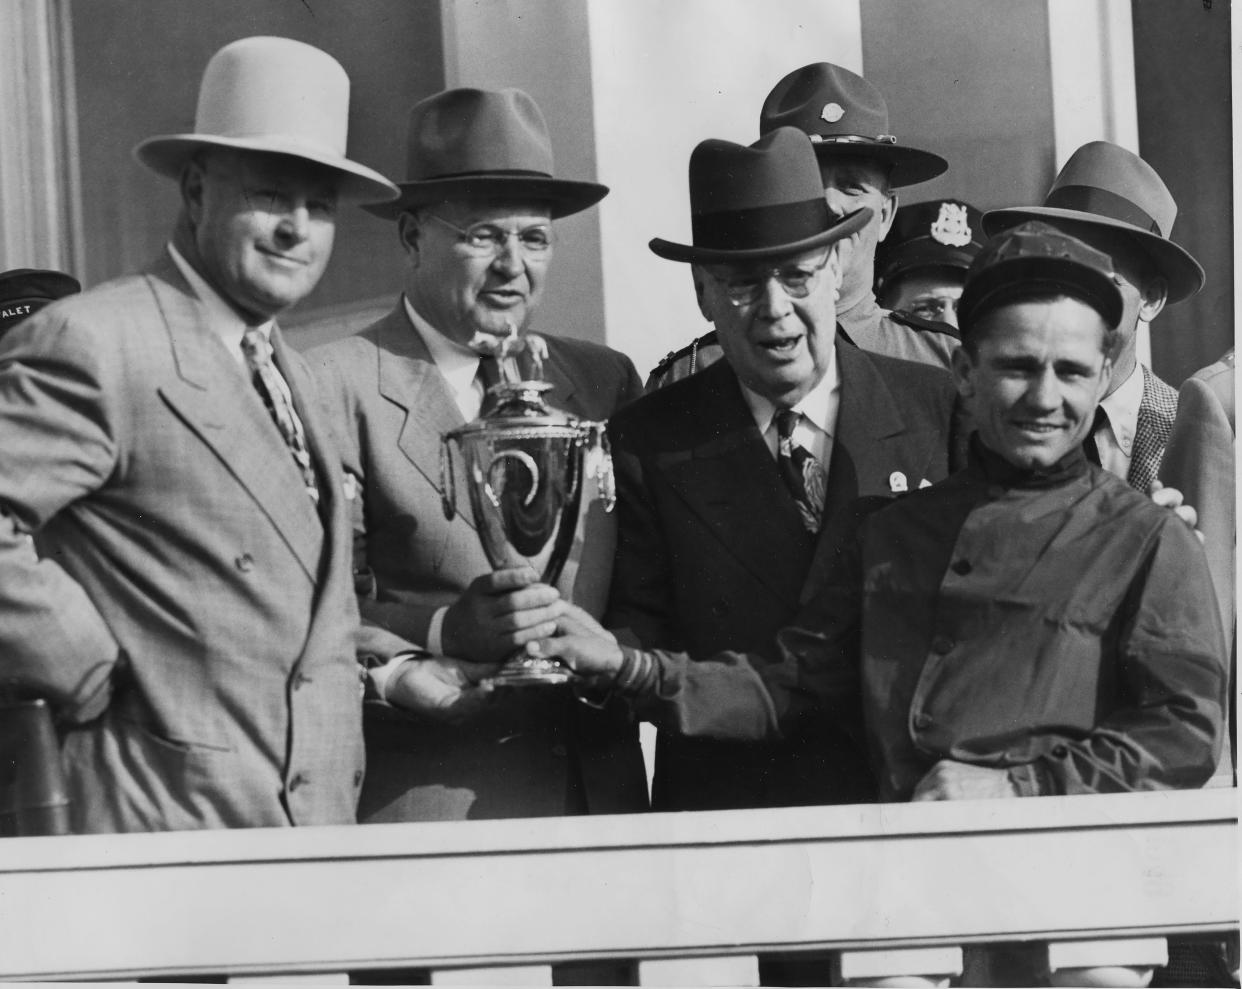 The late Col. Matt Winn with jockey Steve Brooks. The Derby winning horse was Ponder. May 7, 1949.